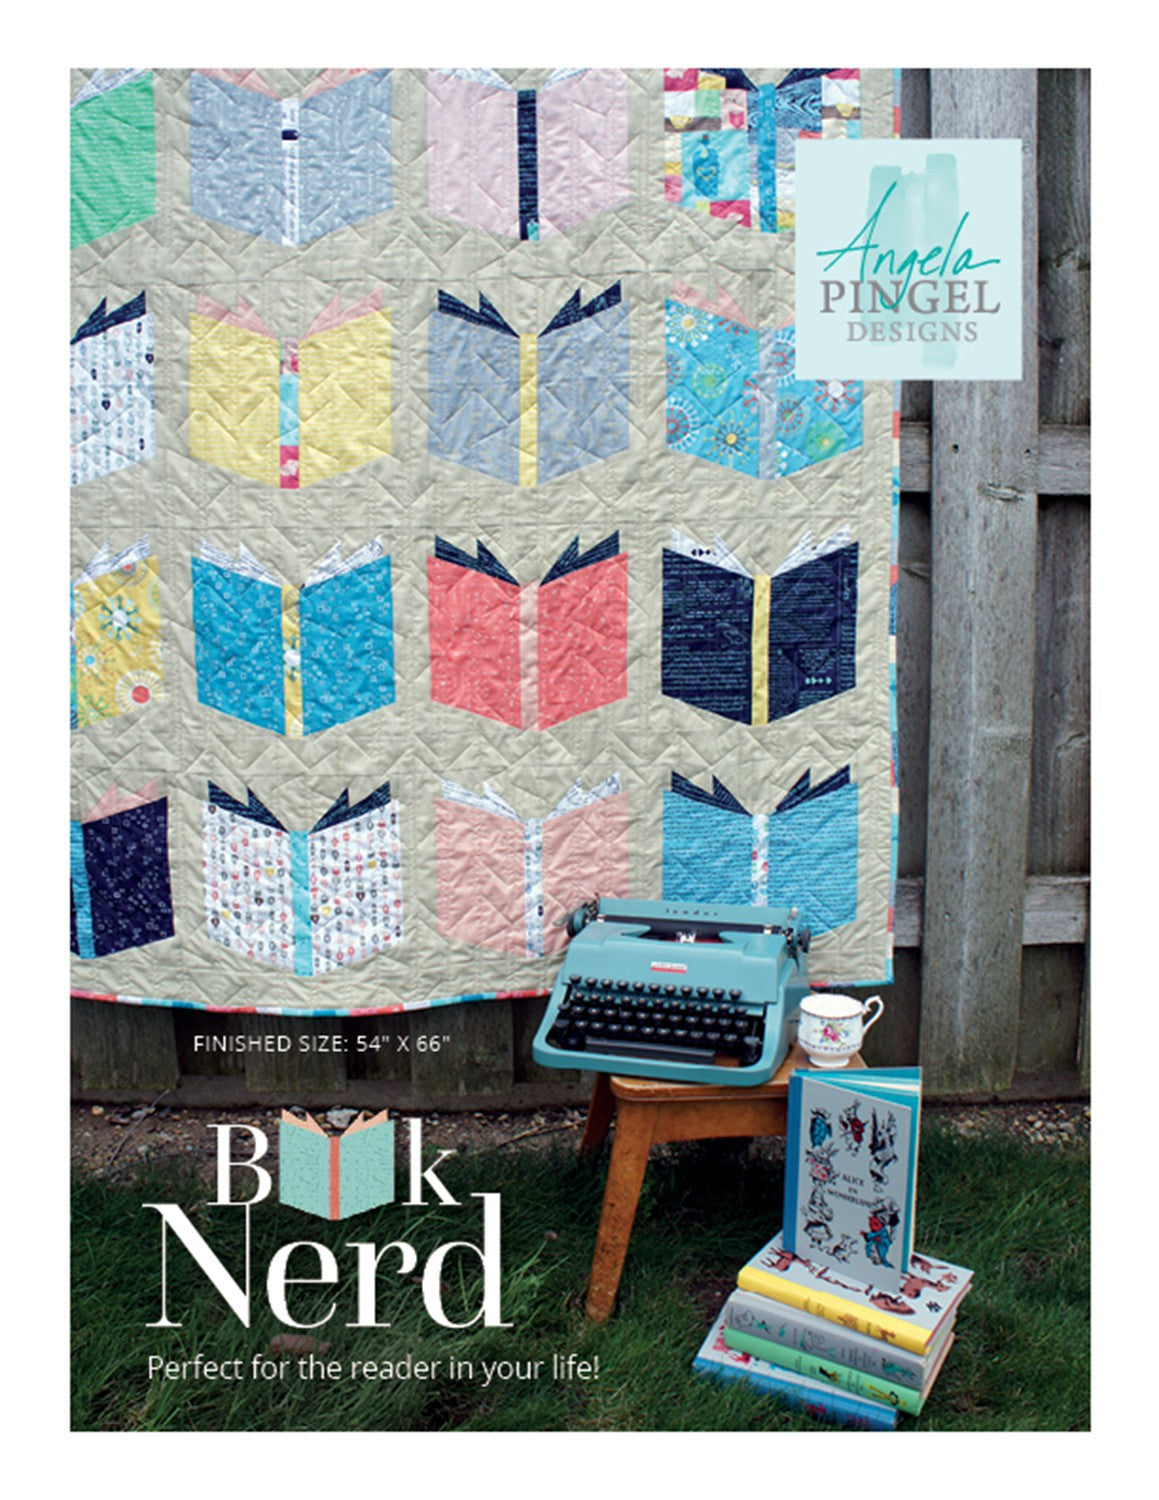 Book Nerd - Quilt Pattern - Angela Pingle